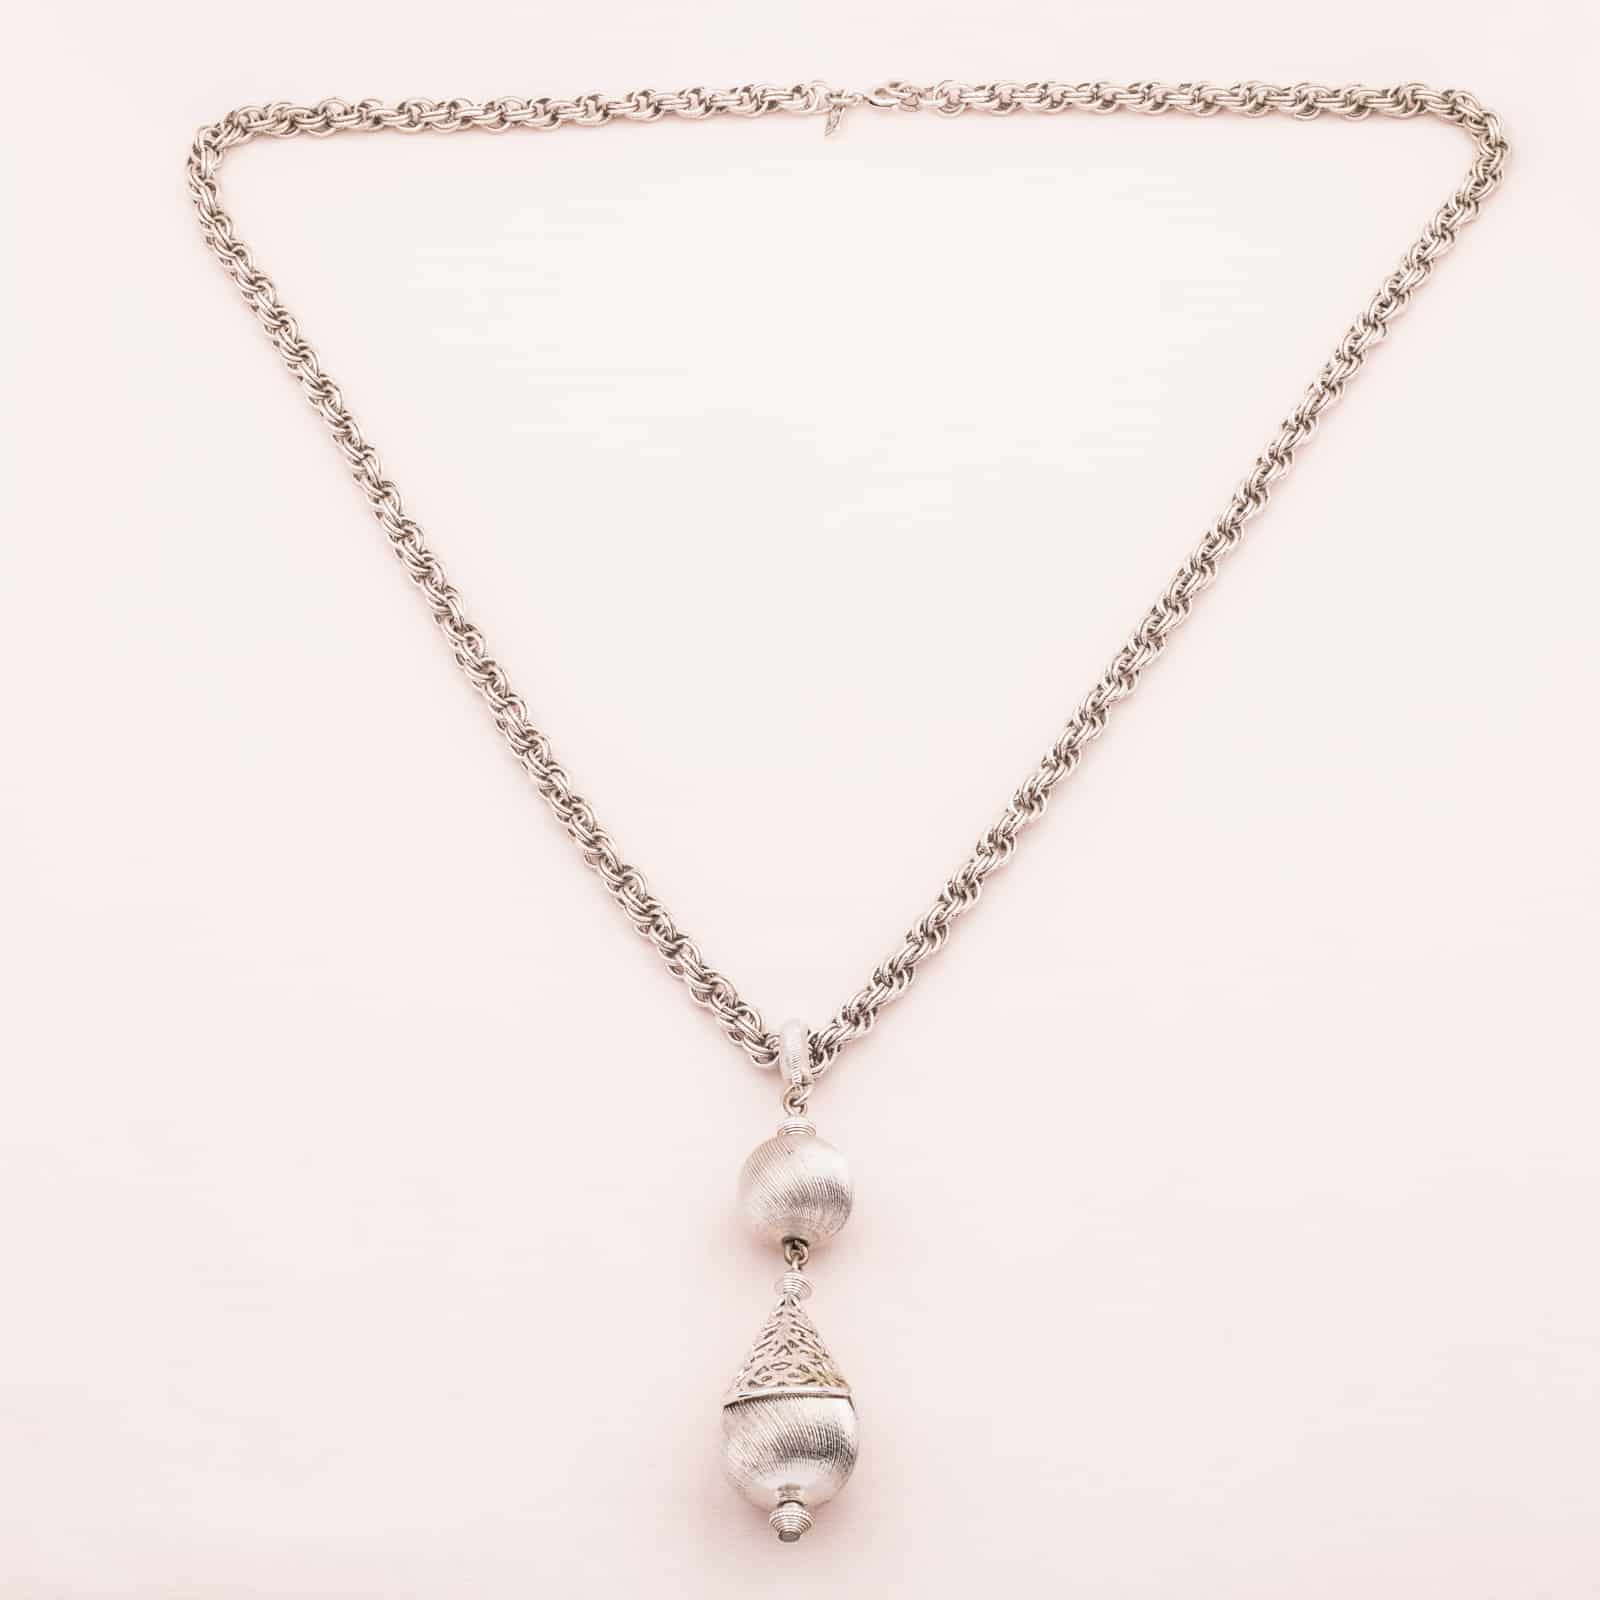 Elegant Monet vintage 16 in faux pearls necklace